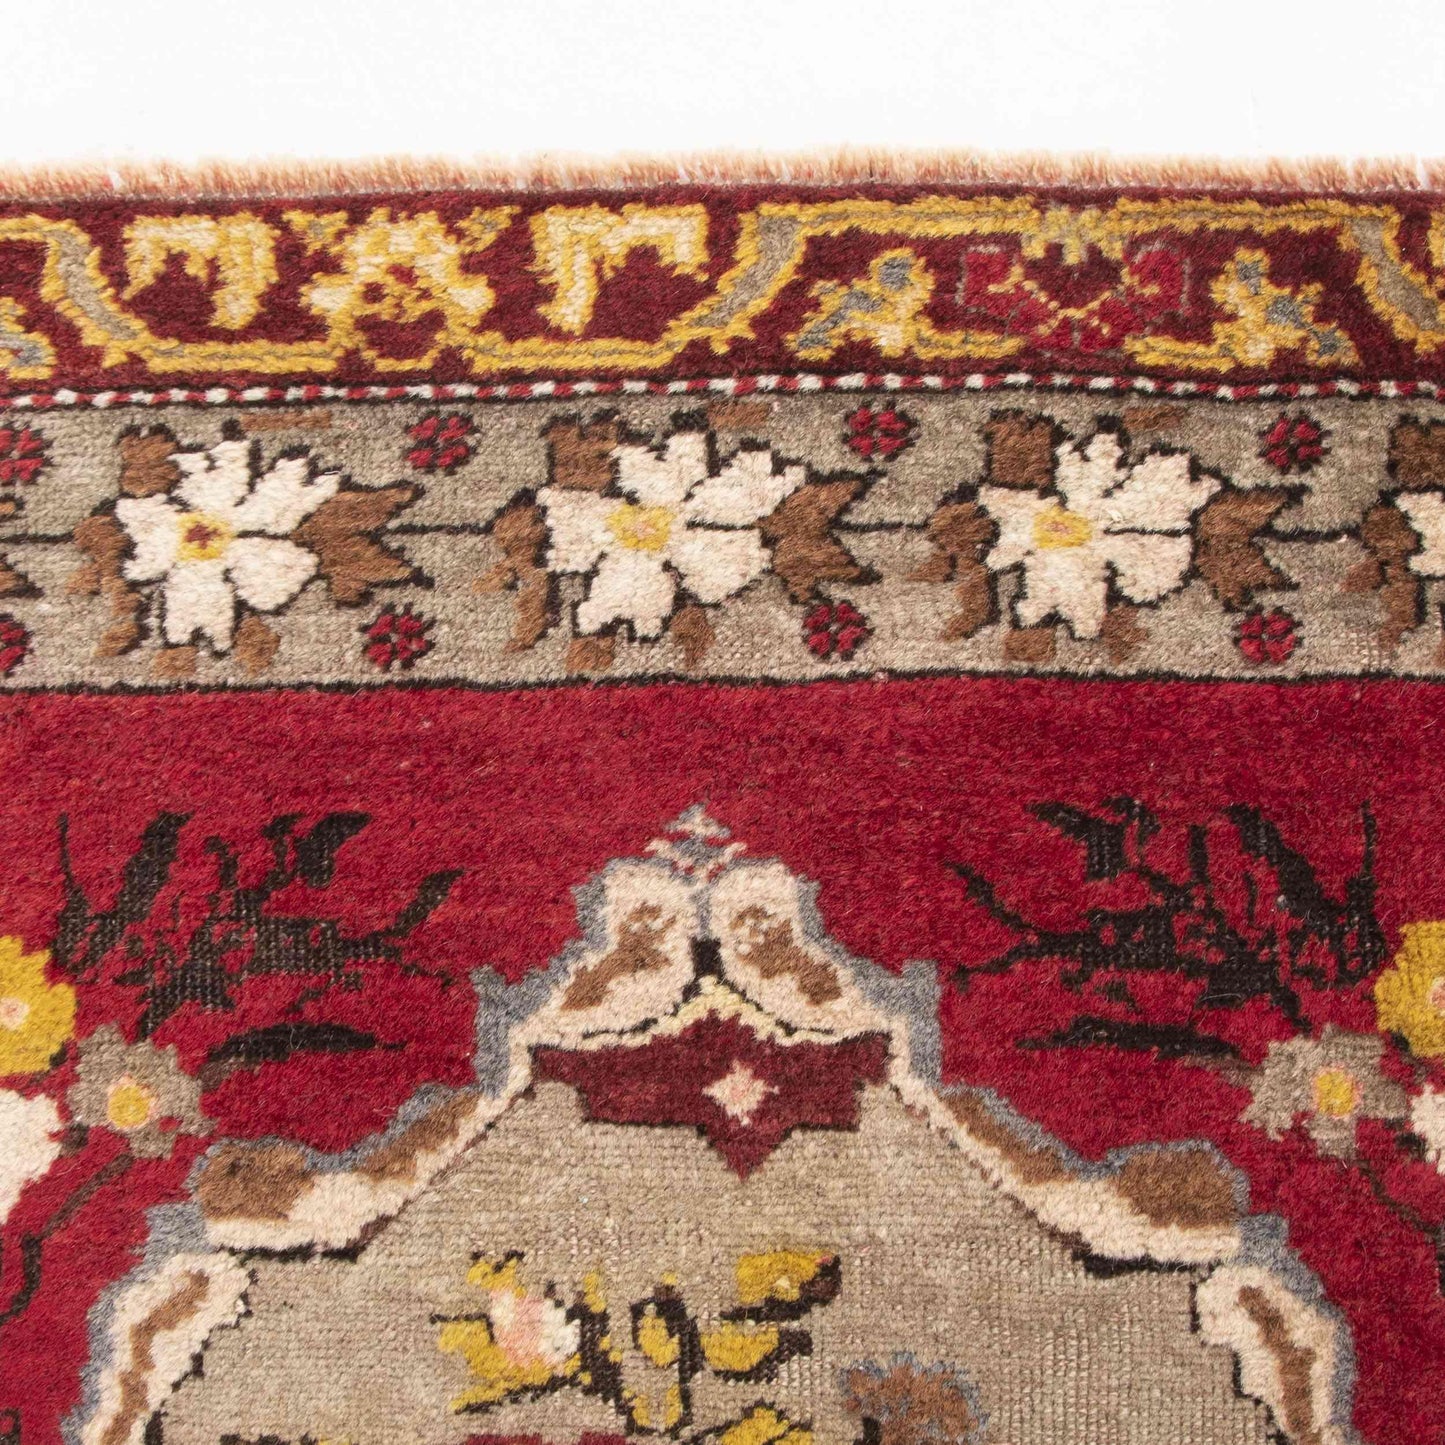 Oriental Rug Anatolian Handwoven Wool On Wool 78 x 80 Cm - 2' 7'' x 2' 8'' Red C014 ER01